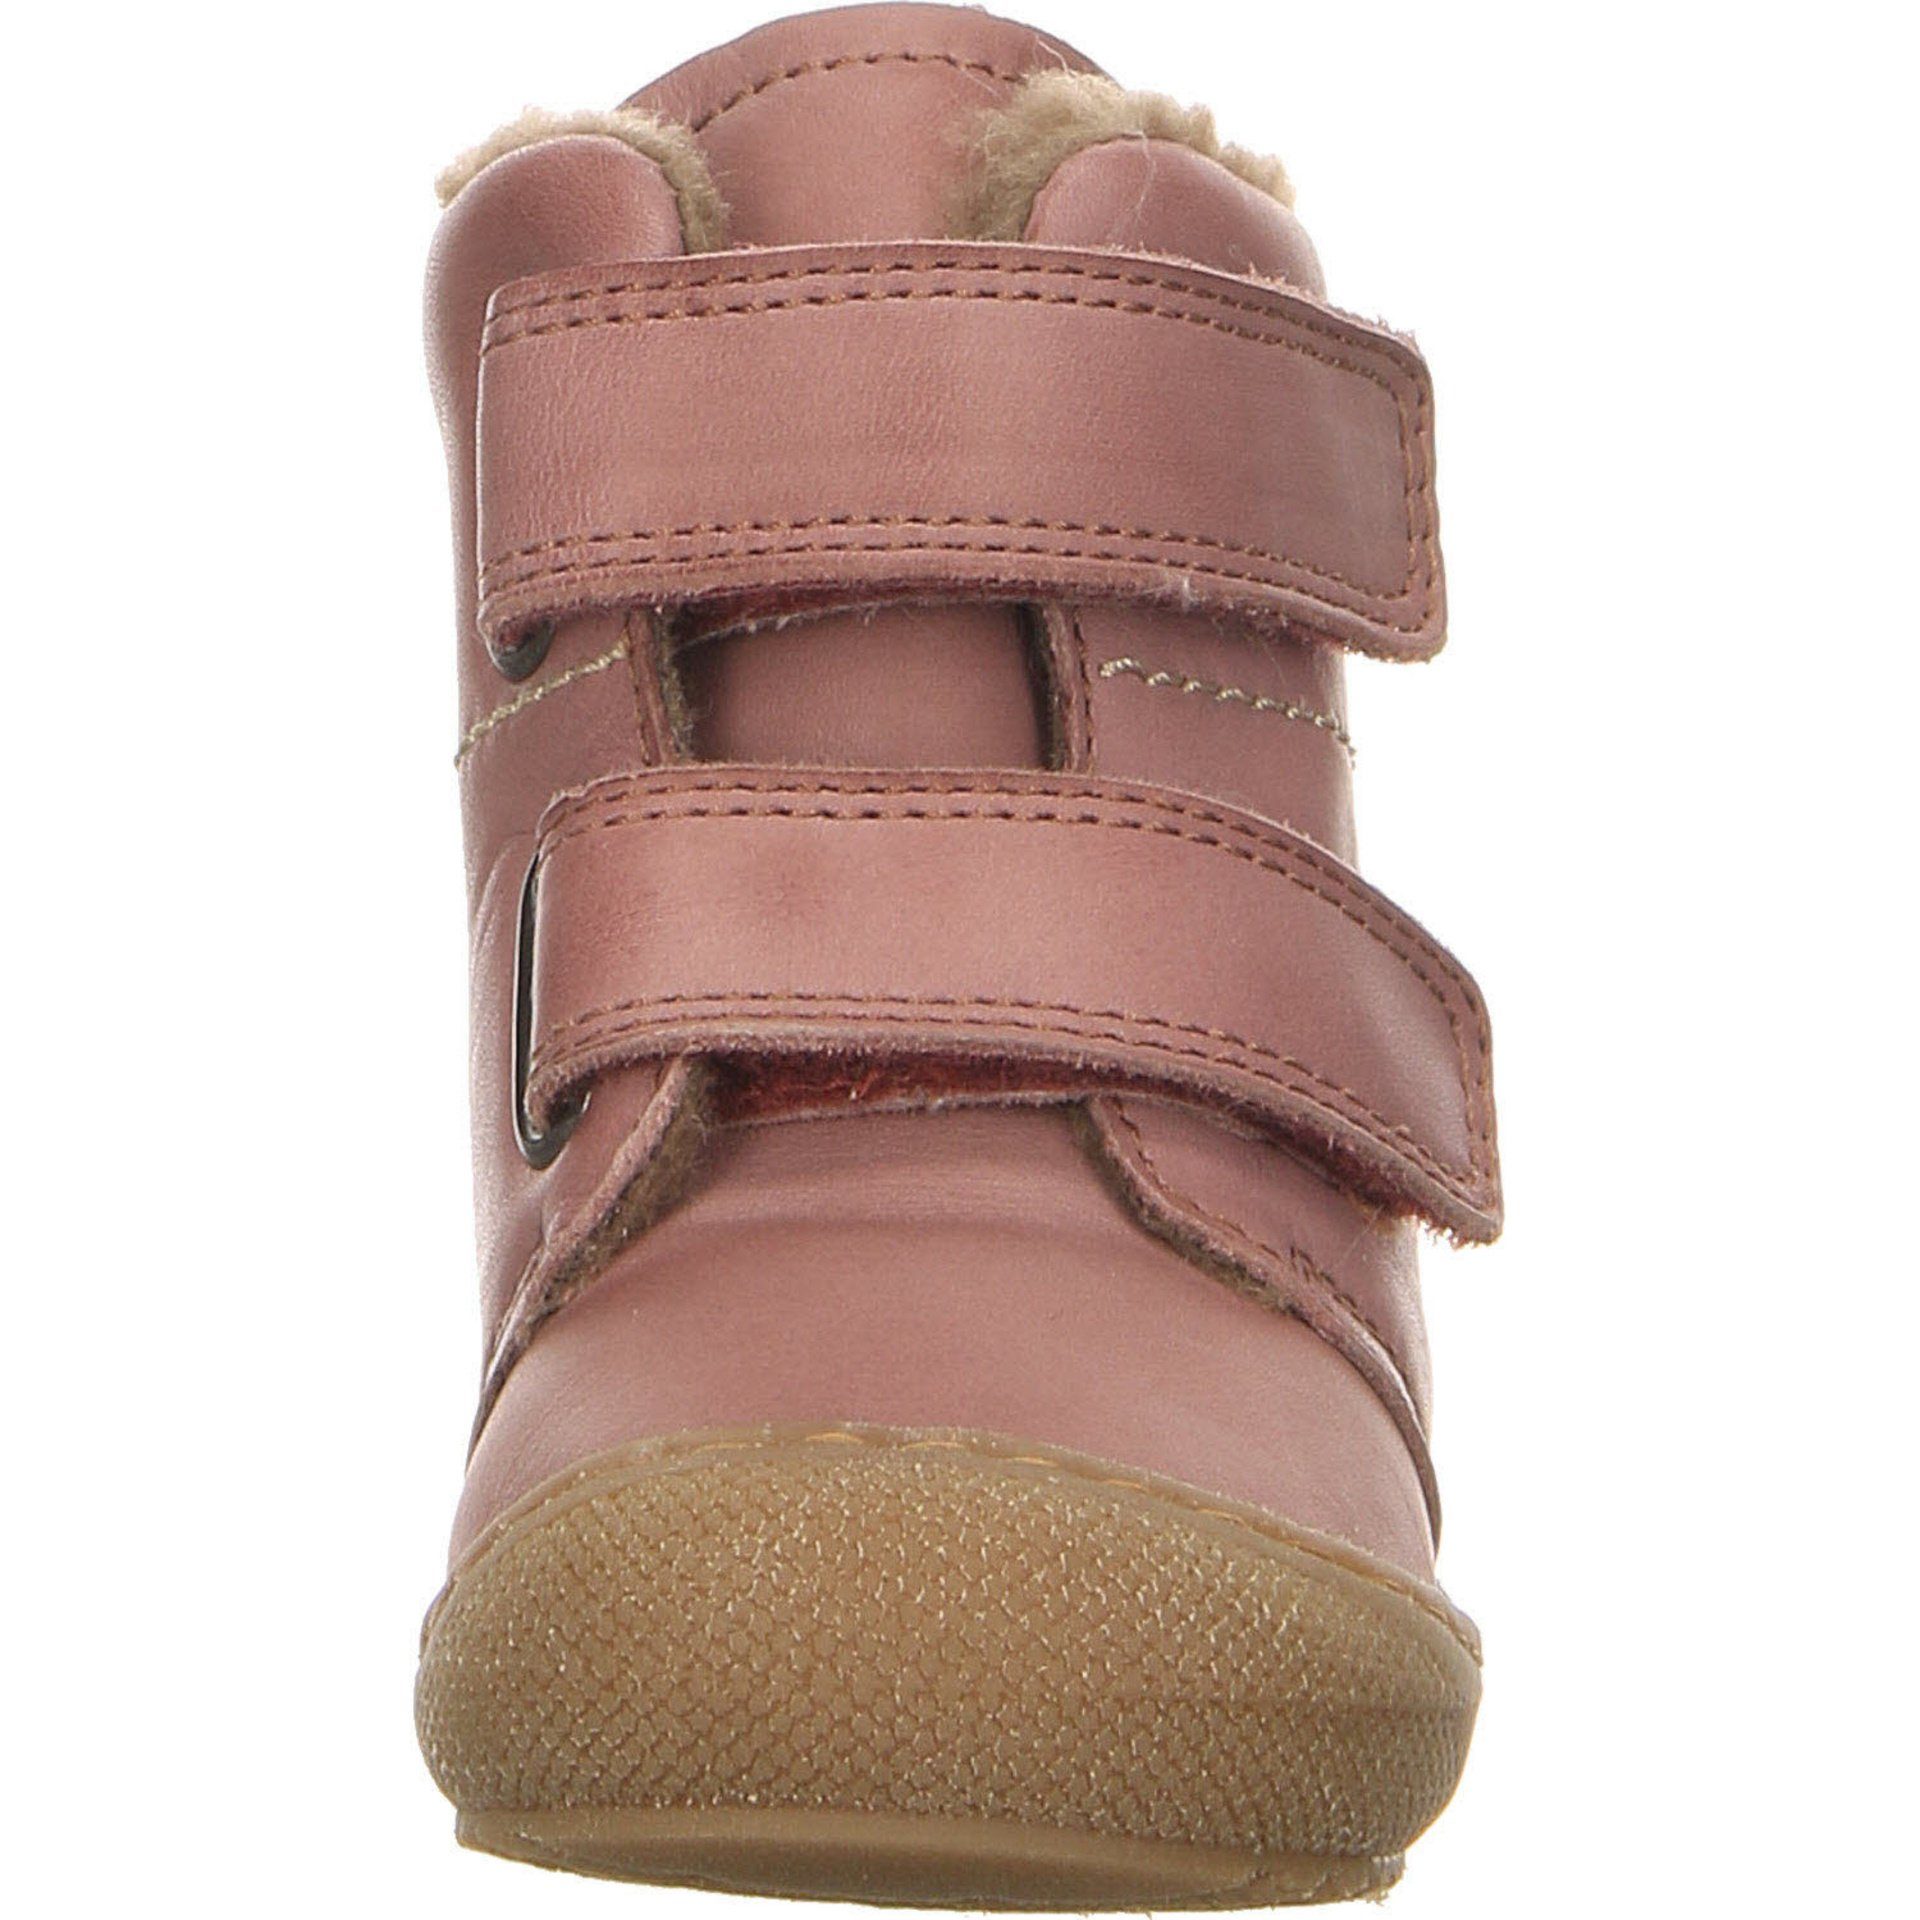 Bubble Krabbelschuhe Boots Glattleder Lauflernschuhe Baby Lauflernschuh Naturino rosa